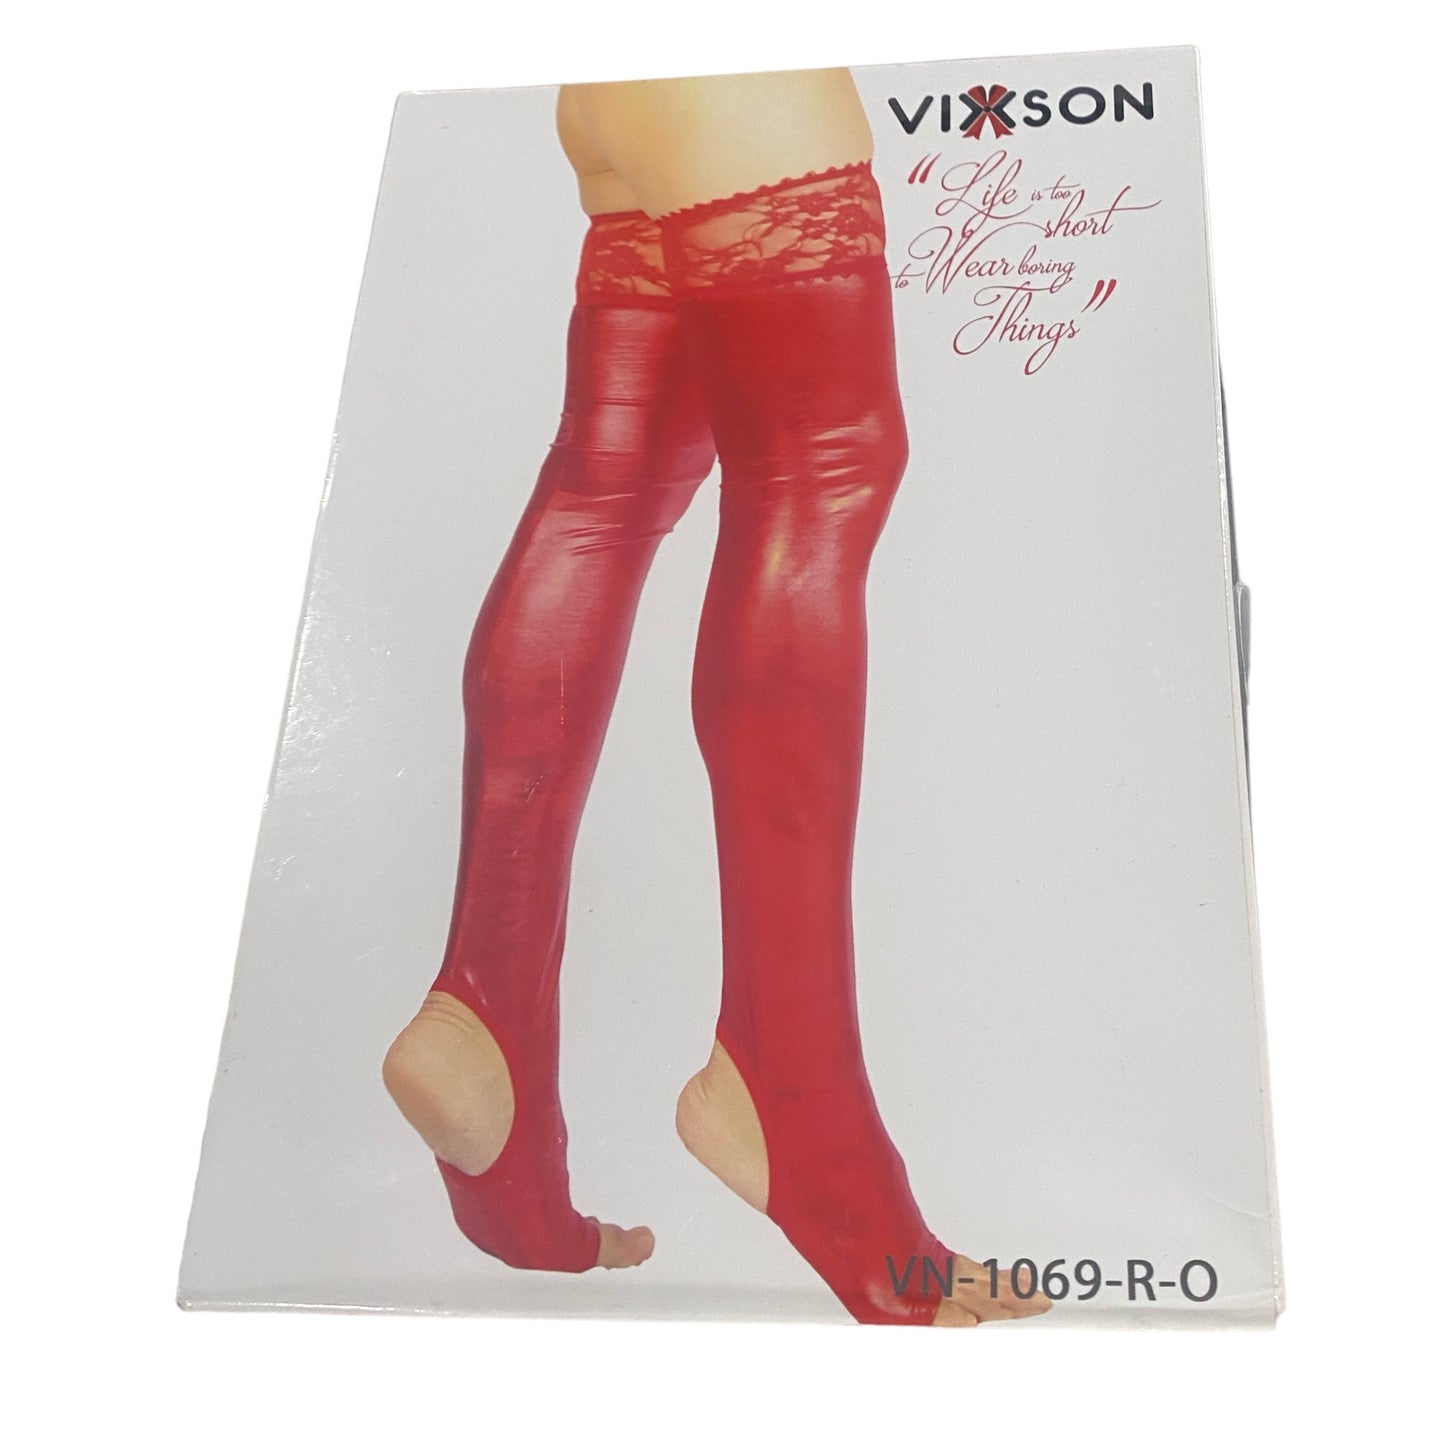 Vixson - VN-1069 - Female Lingerie - One Size S-L - Red